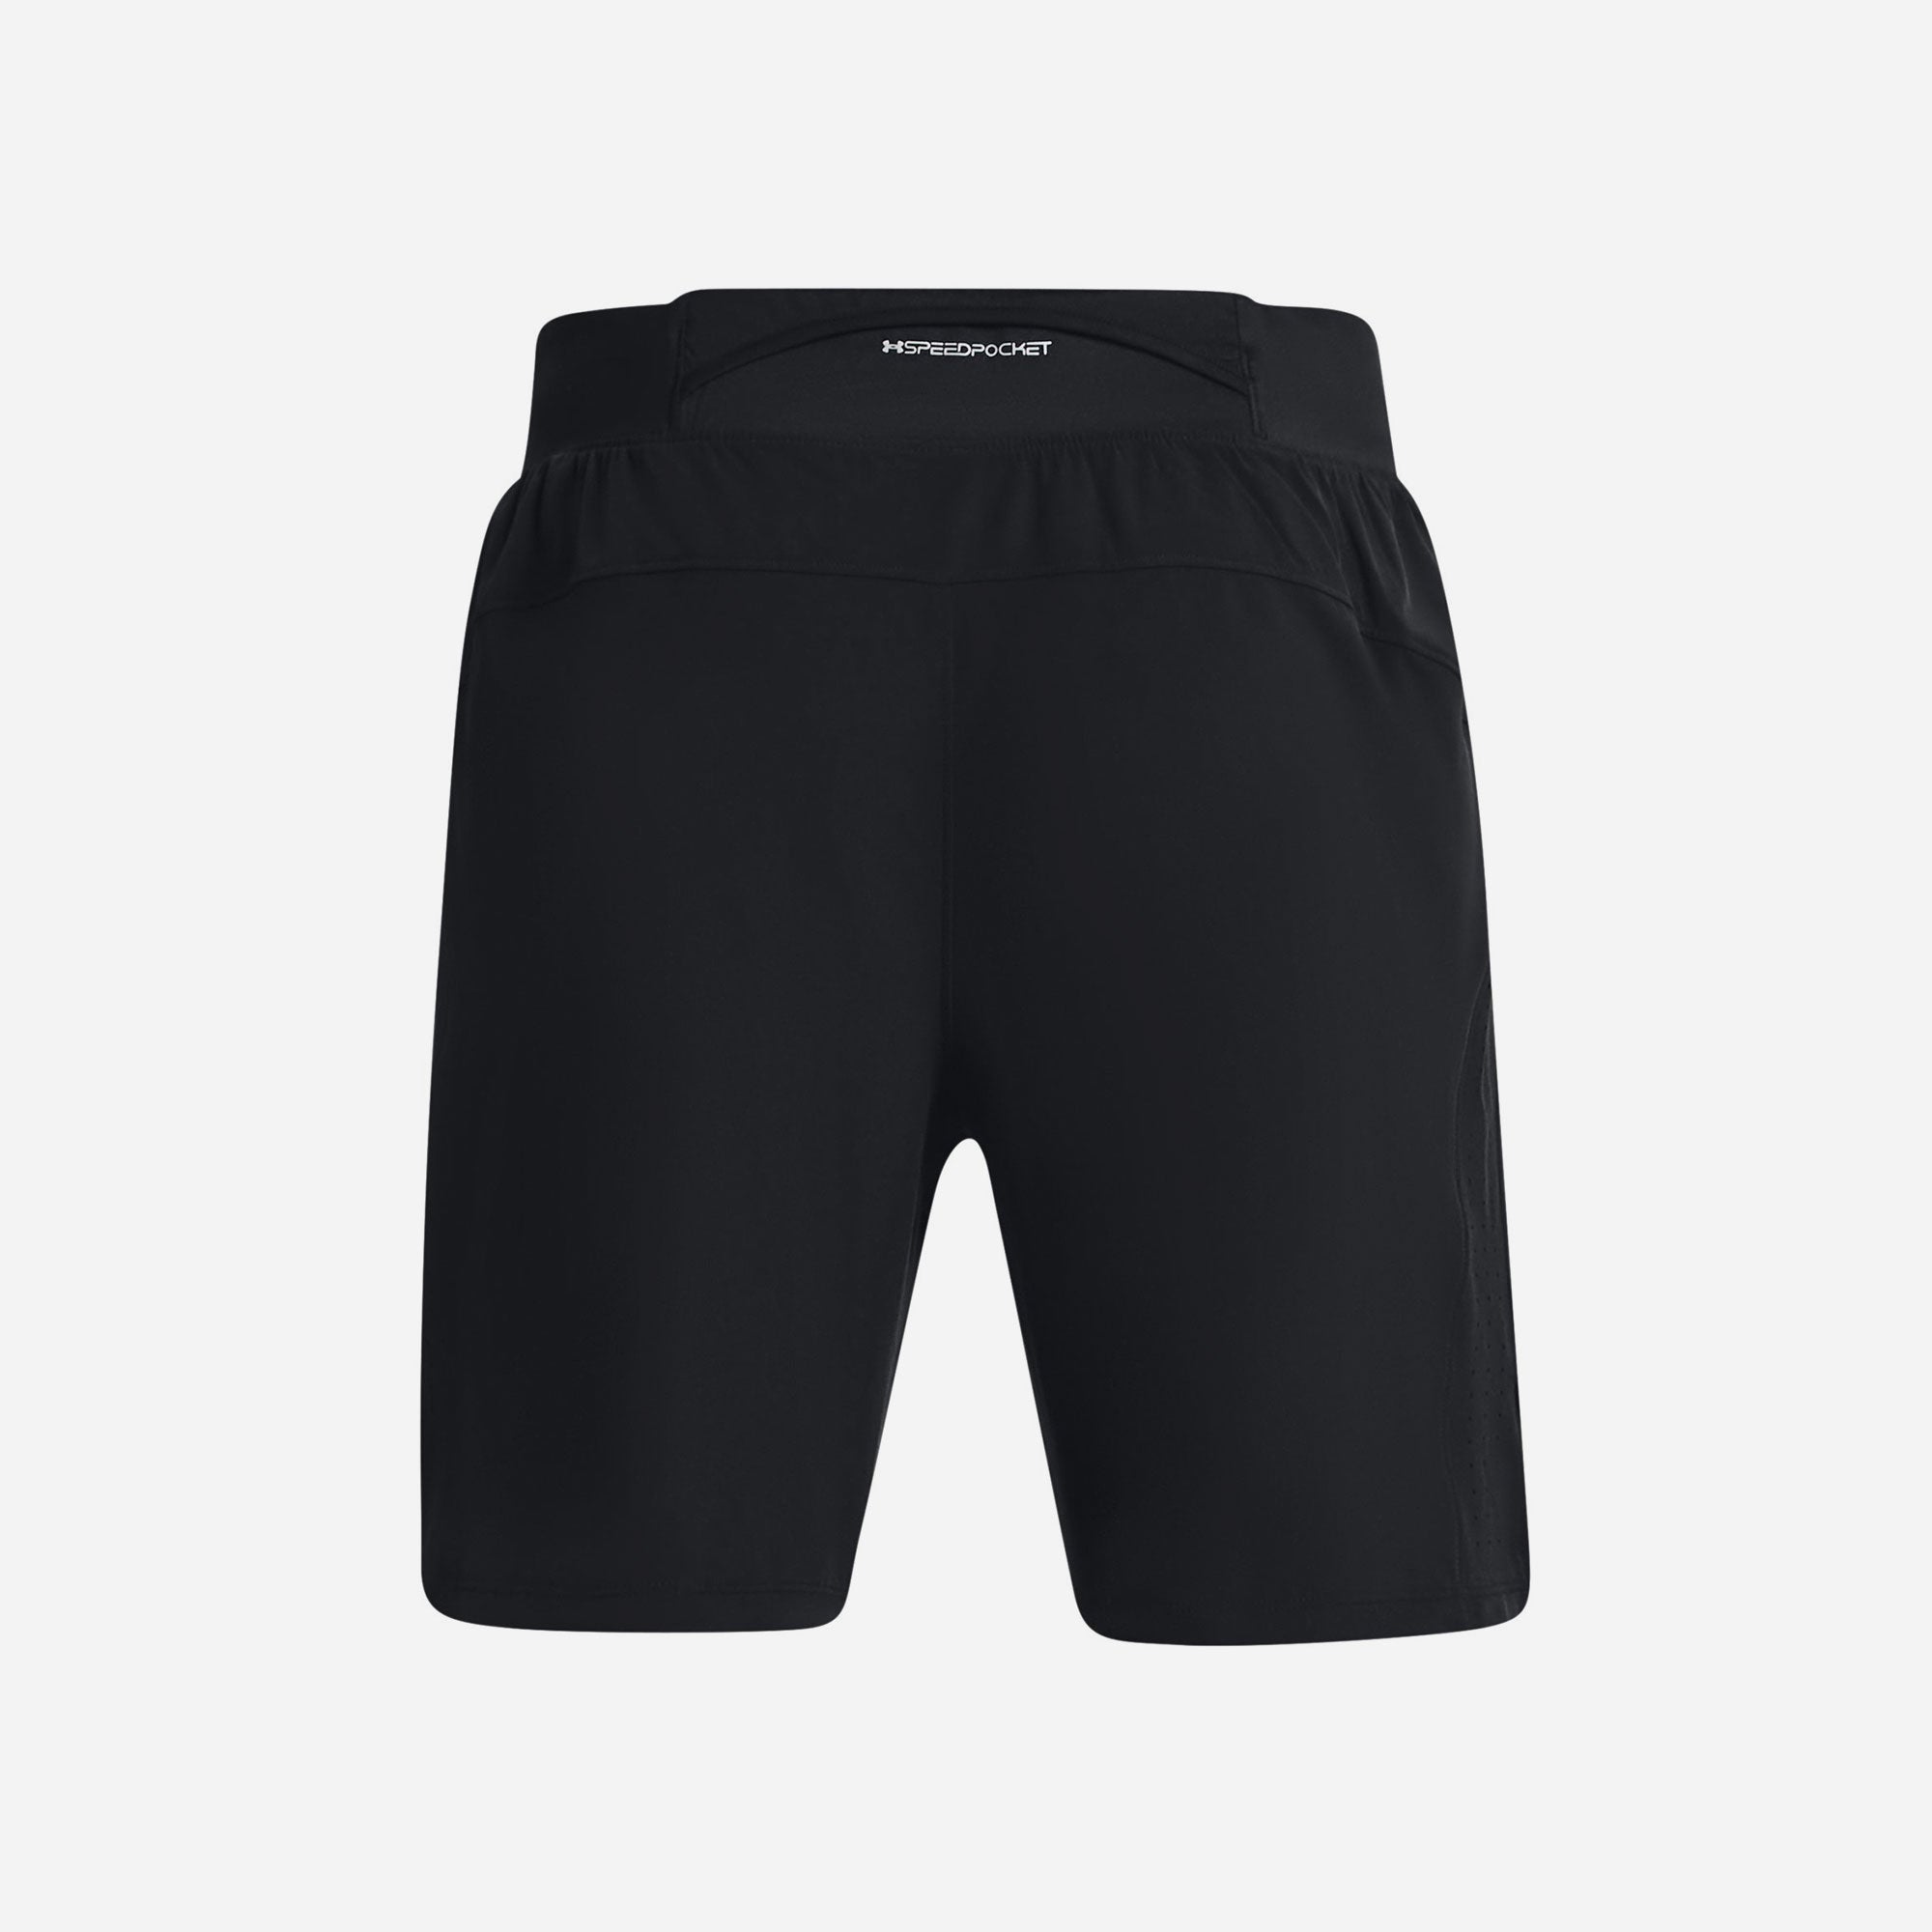 Under Armour SpeedPocket 7 - Running Shorts Track Pants